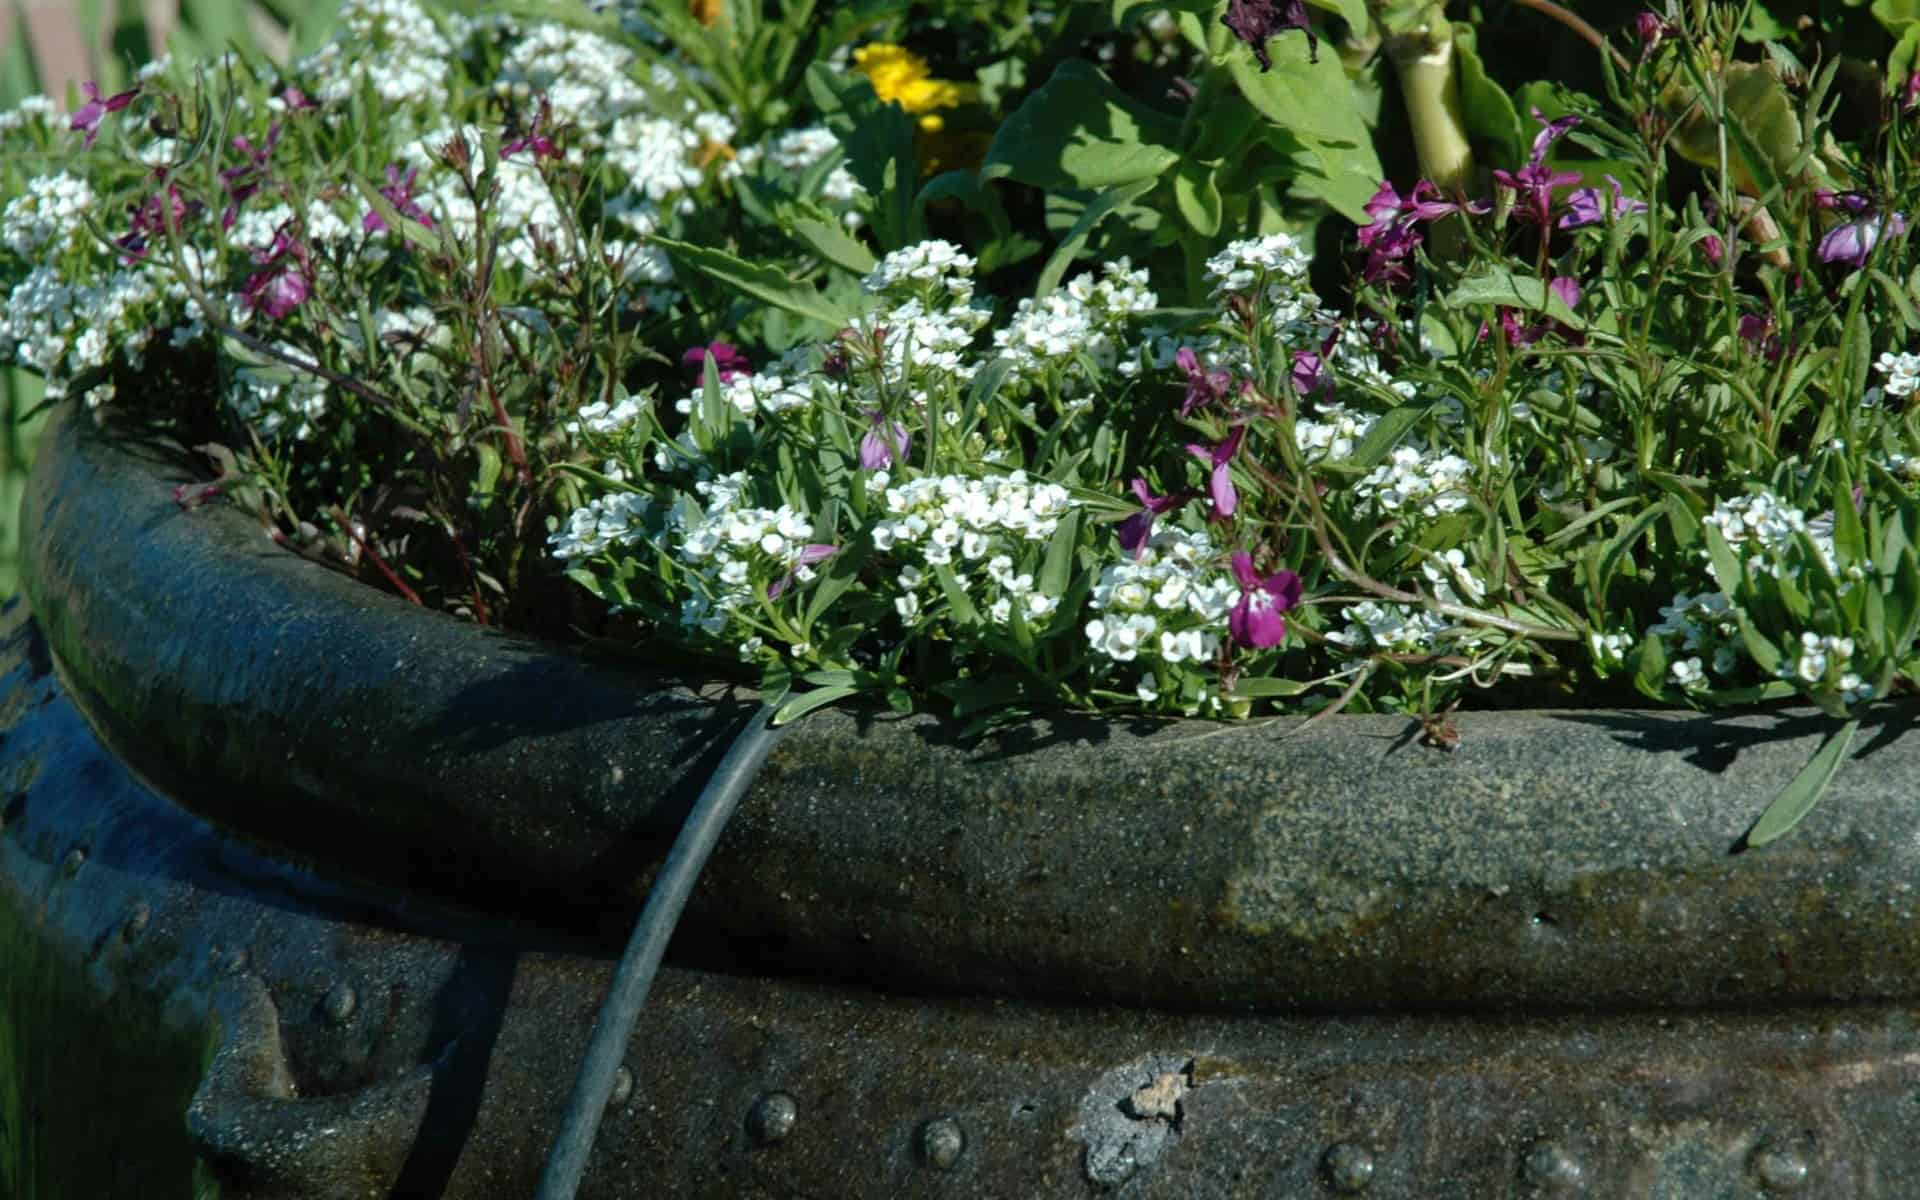 Garden pot with flowers